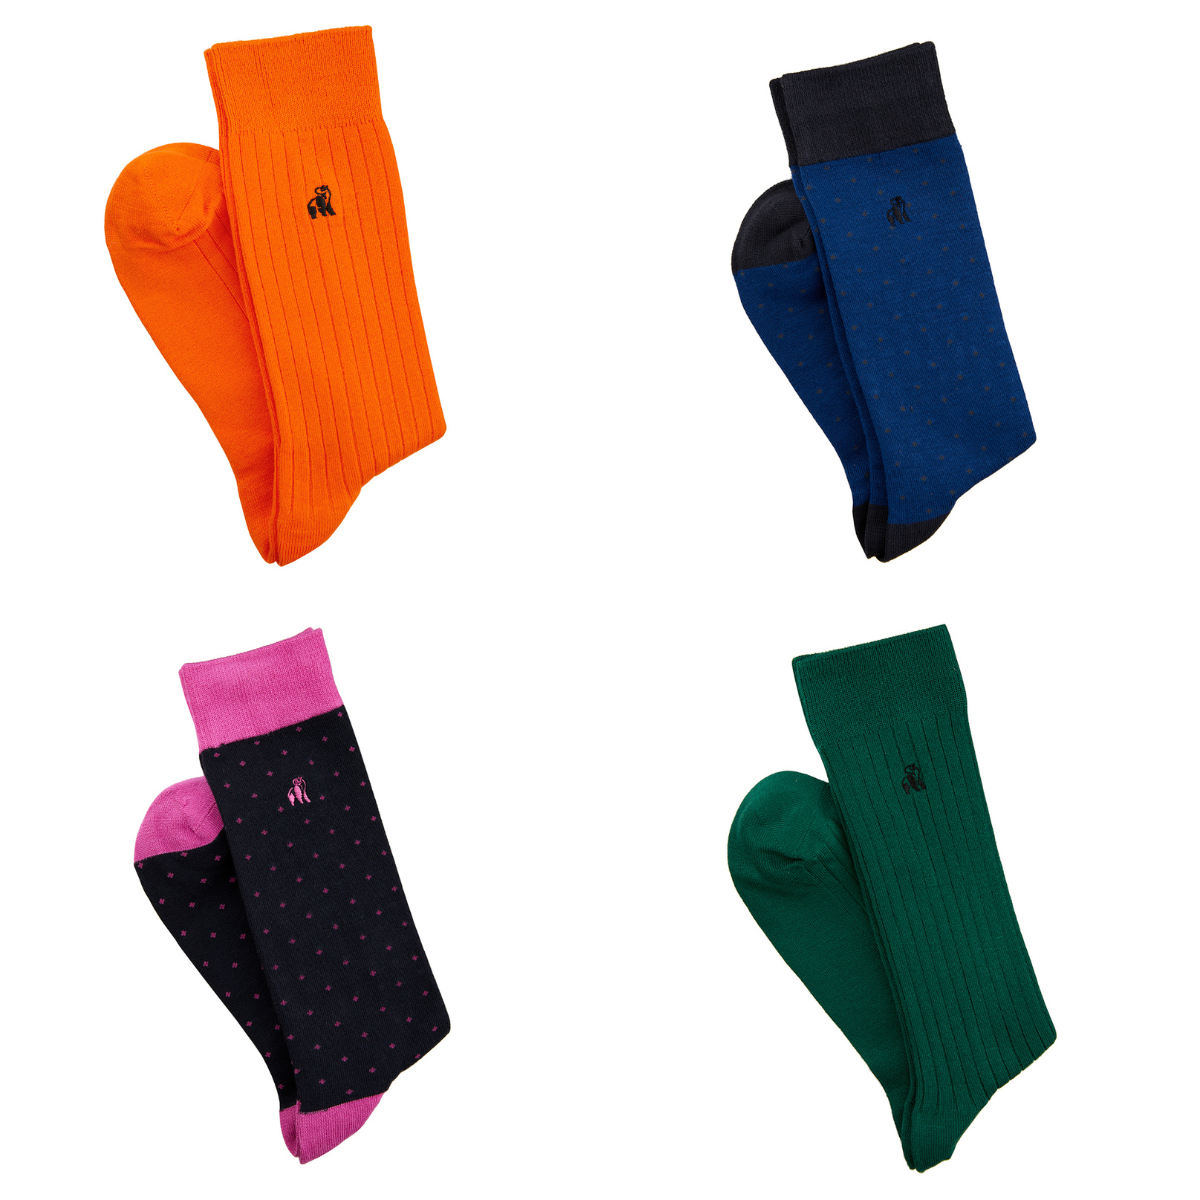 Bamboo Socks - Choose From Multiple Designs